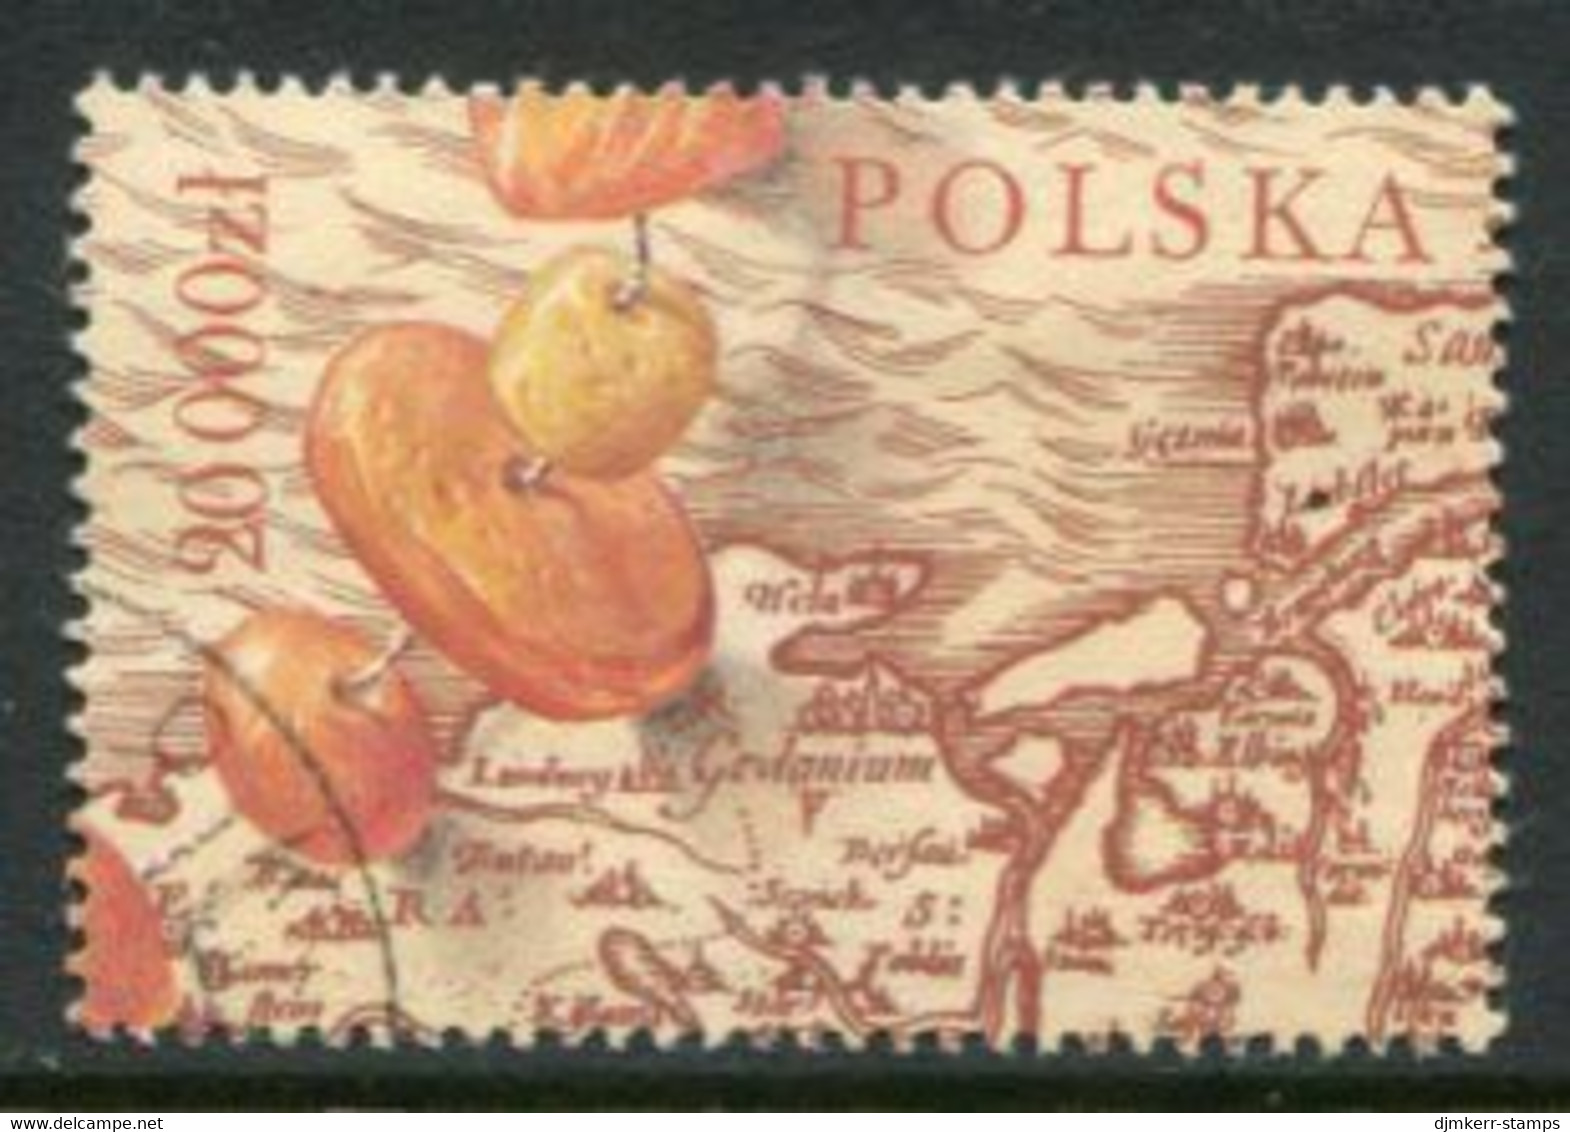 POLAND 1993 POLSKA Philatelic Exhibition; Amber Road Single Ex Block Used.  Michel 3430 - Used Stamps